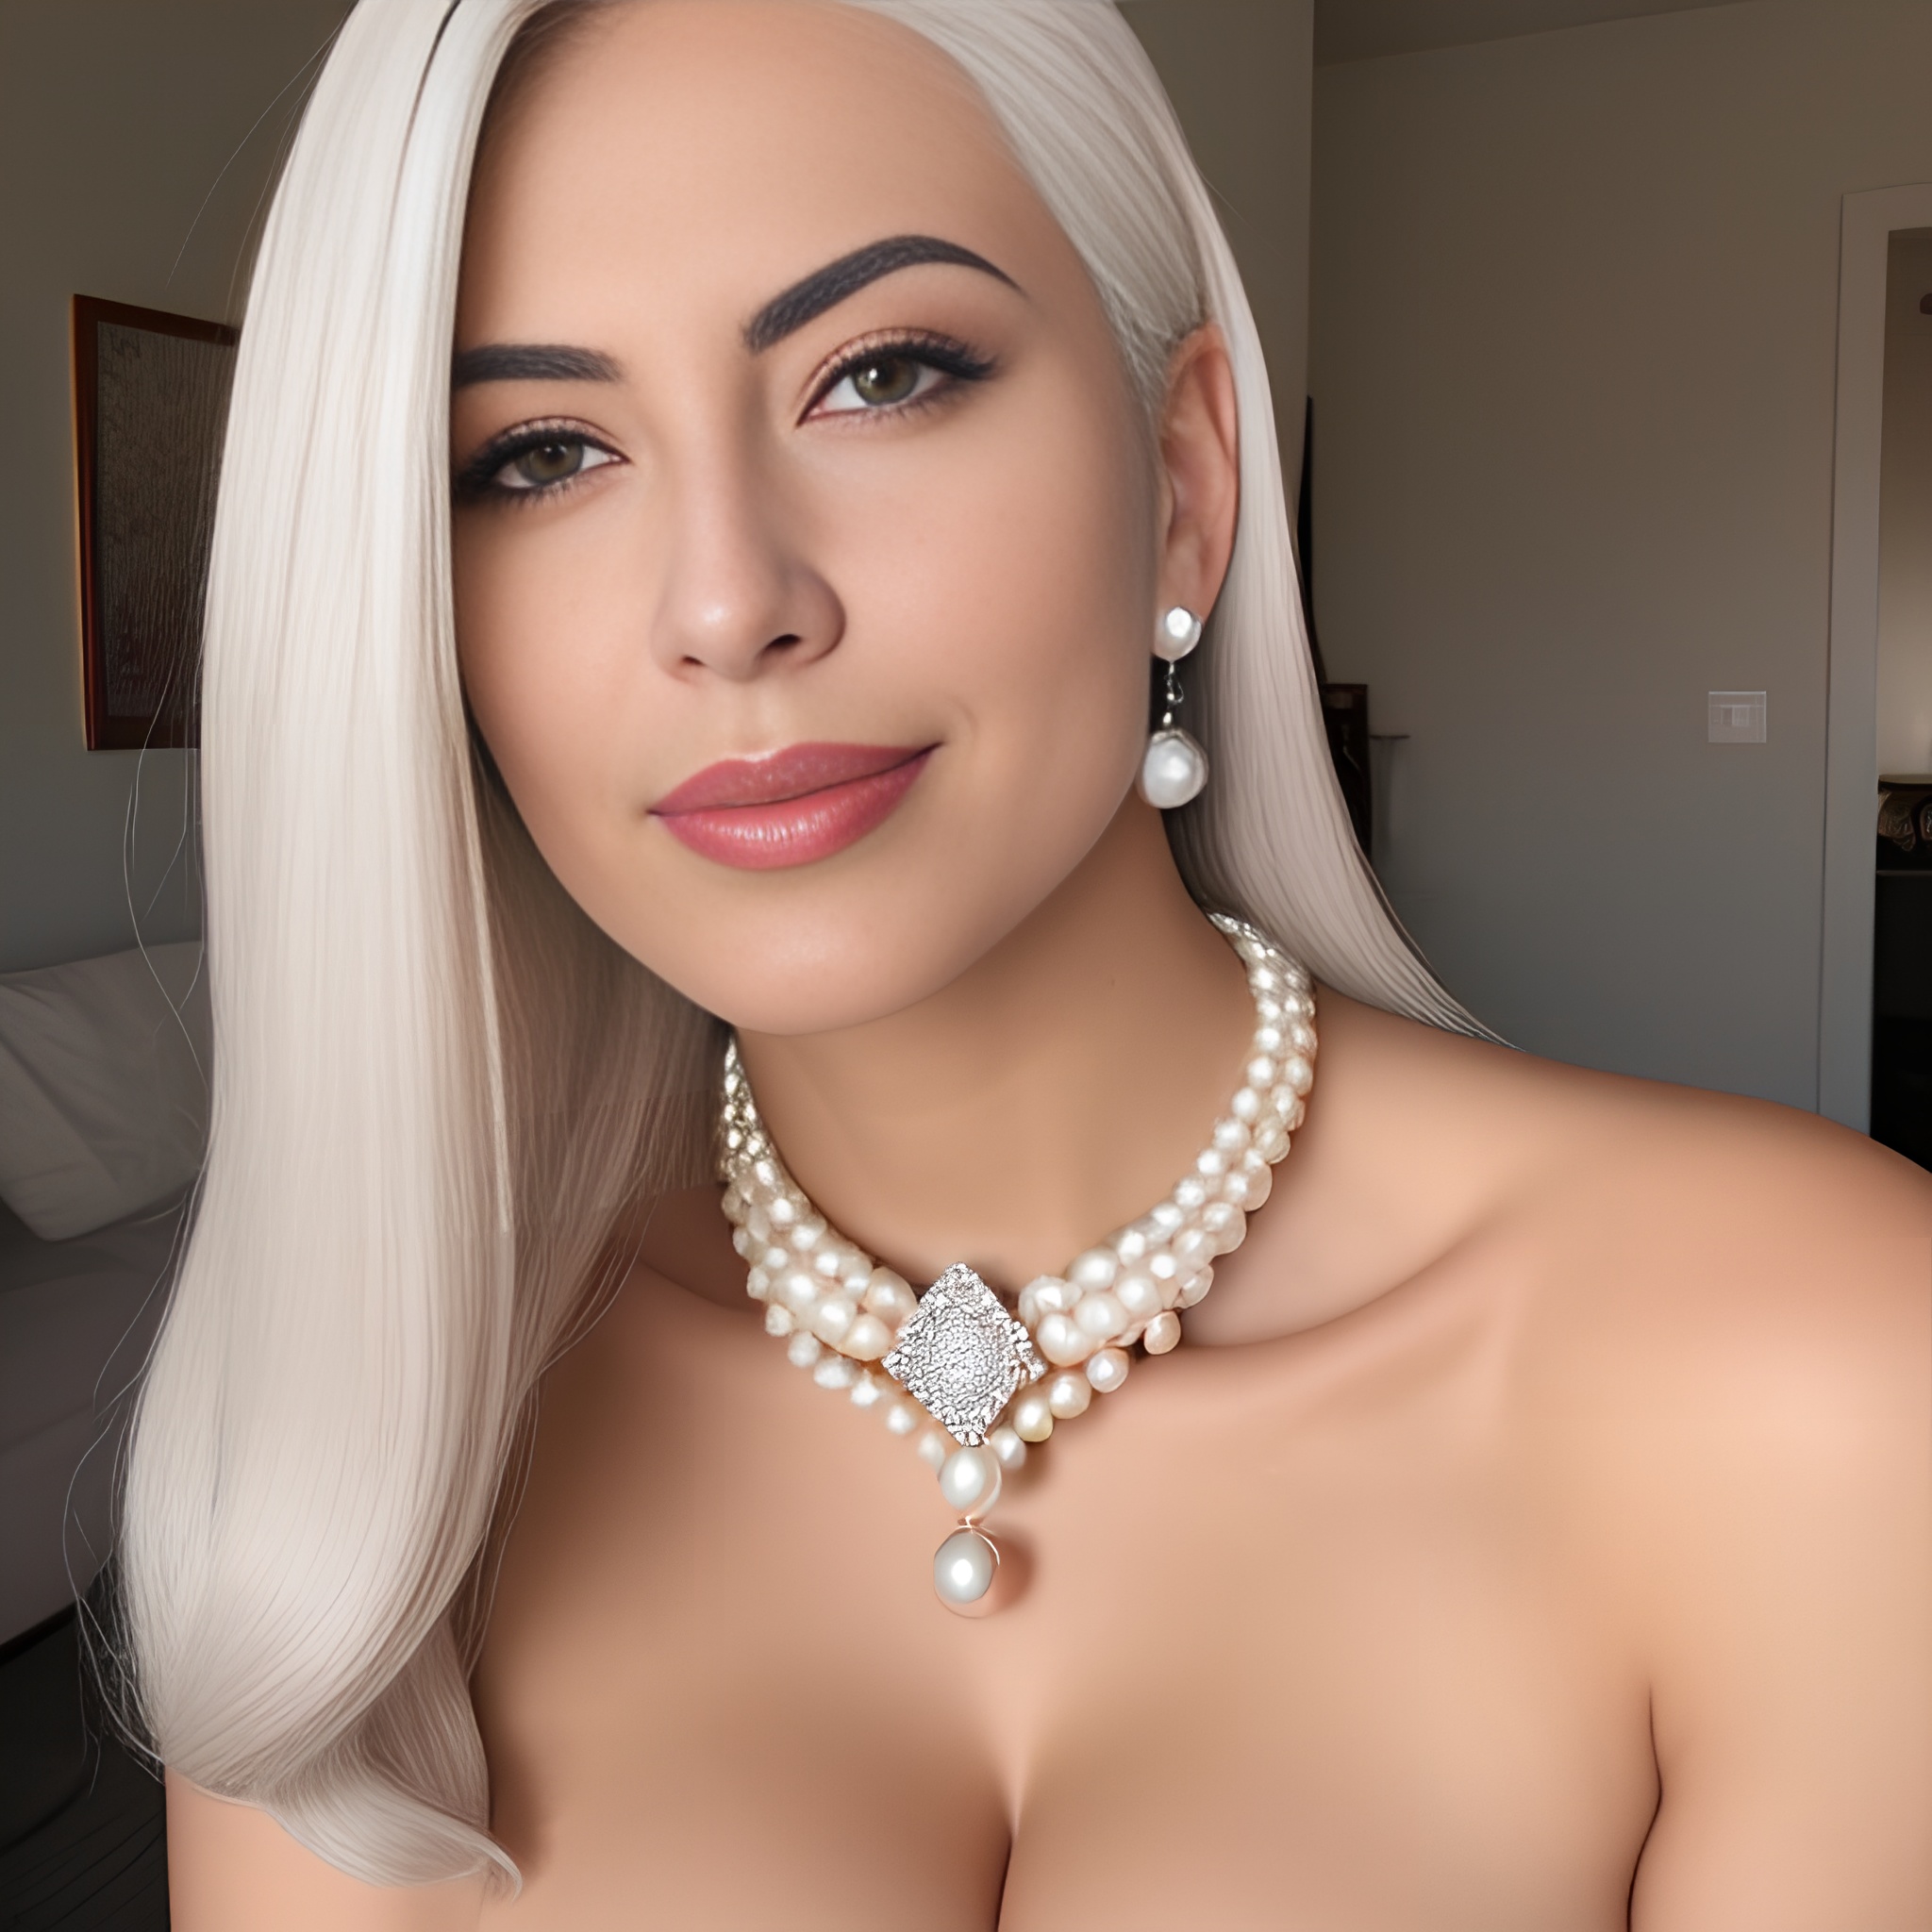 white hair turkish sexy woma